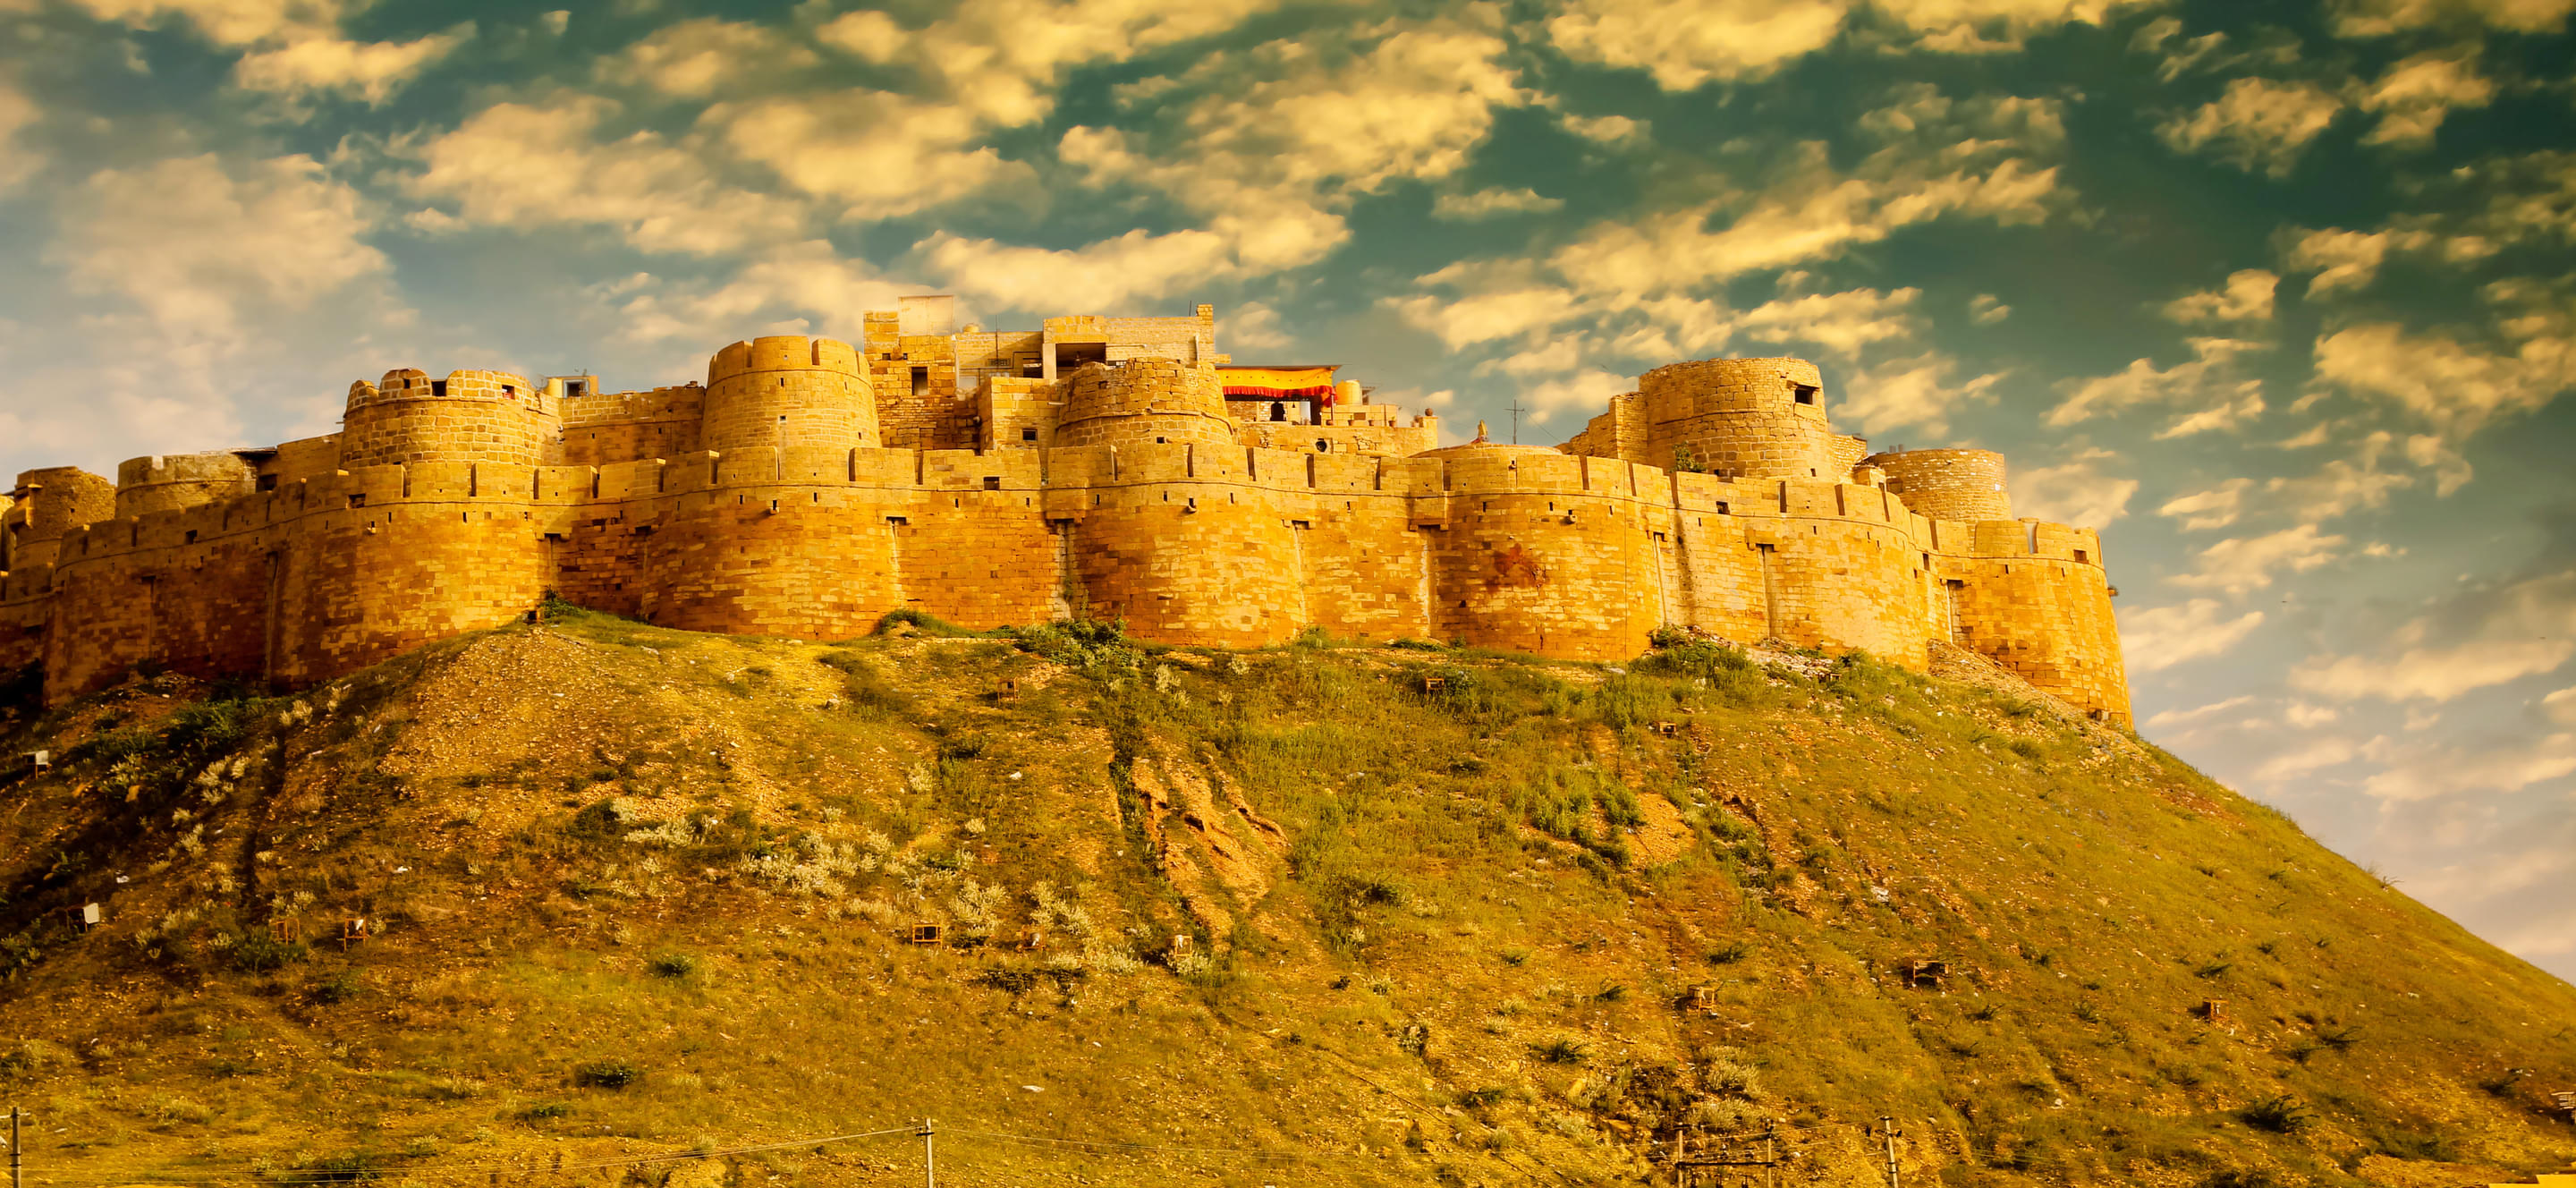 Jaisalmer Fort Overview